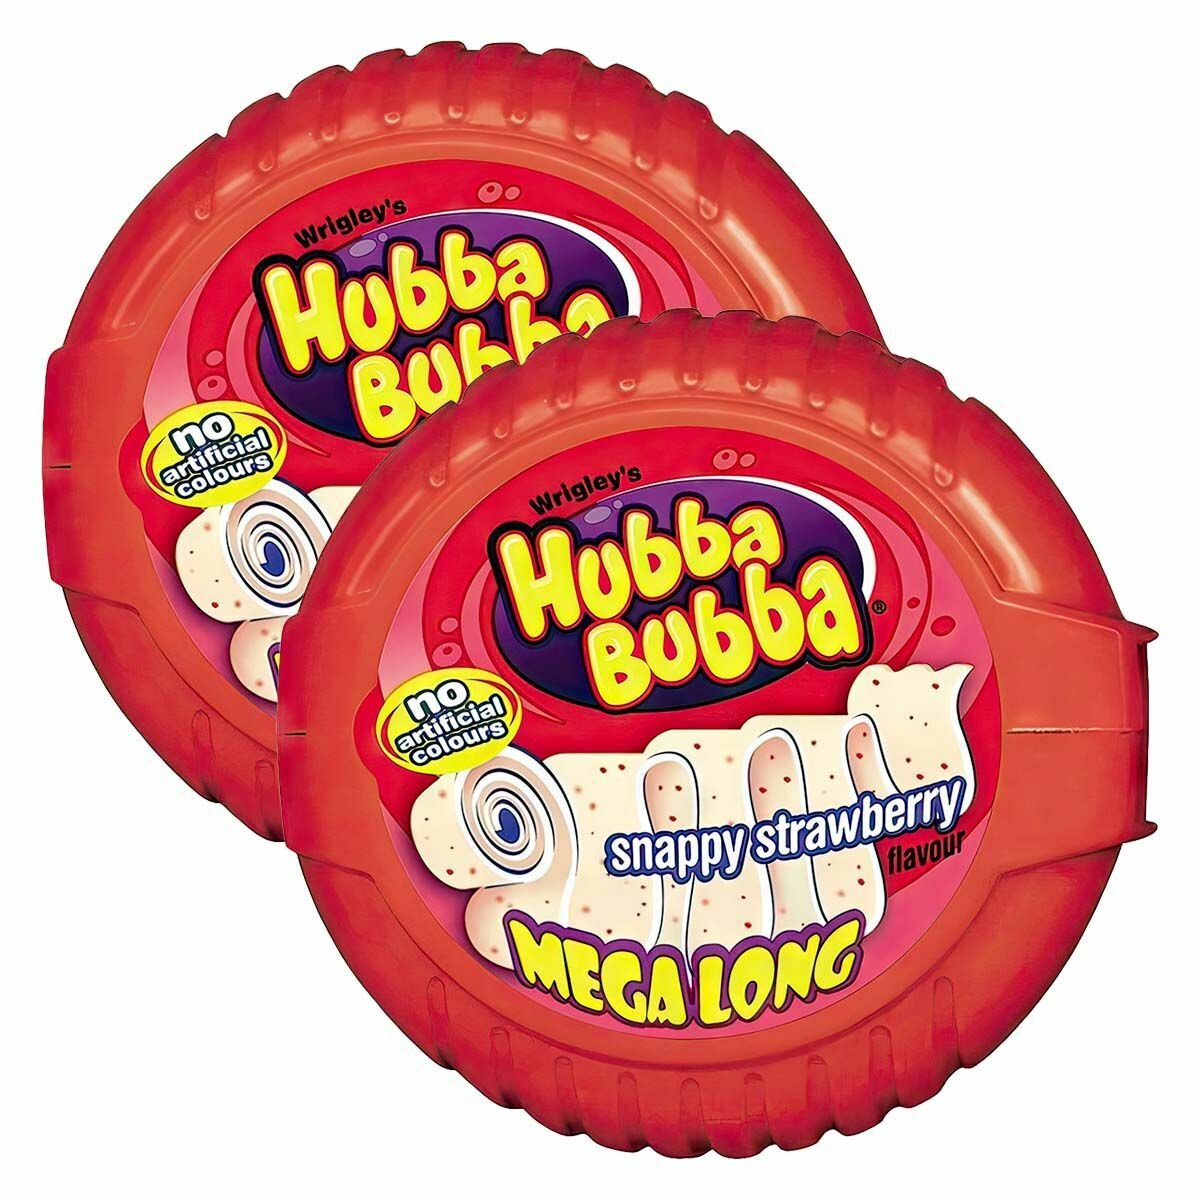 Жевательная резинка Wrigley's Hubba Bubba Mega Long Snappy Strawberry со вкусом клубники (Германия) 56 г (2 шт)